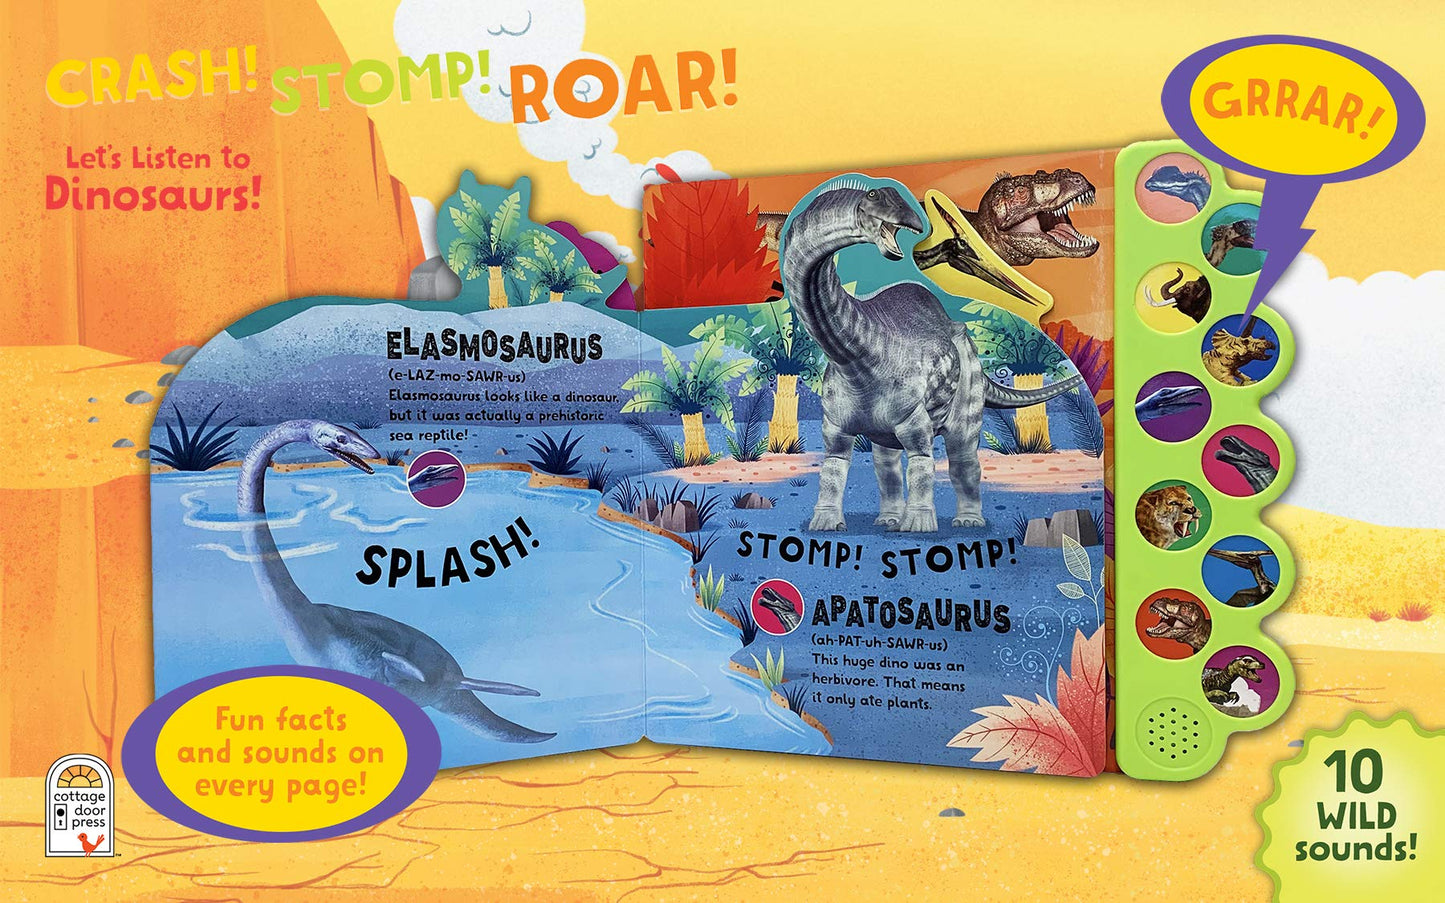 Crash! Stomp! Roar! Let's Listen to Dinosaurs! Board book – Illustrated